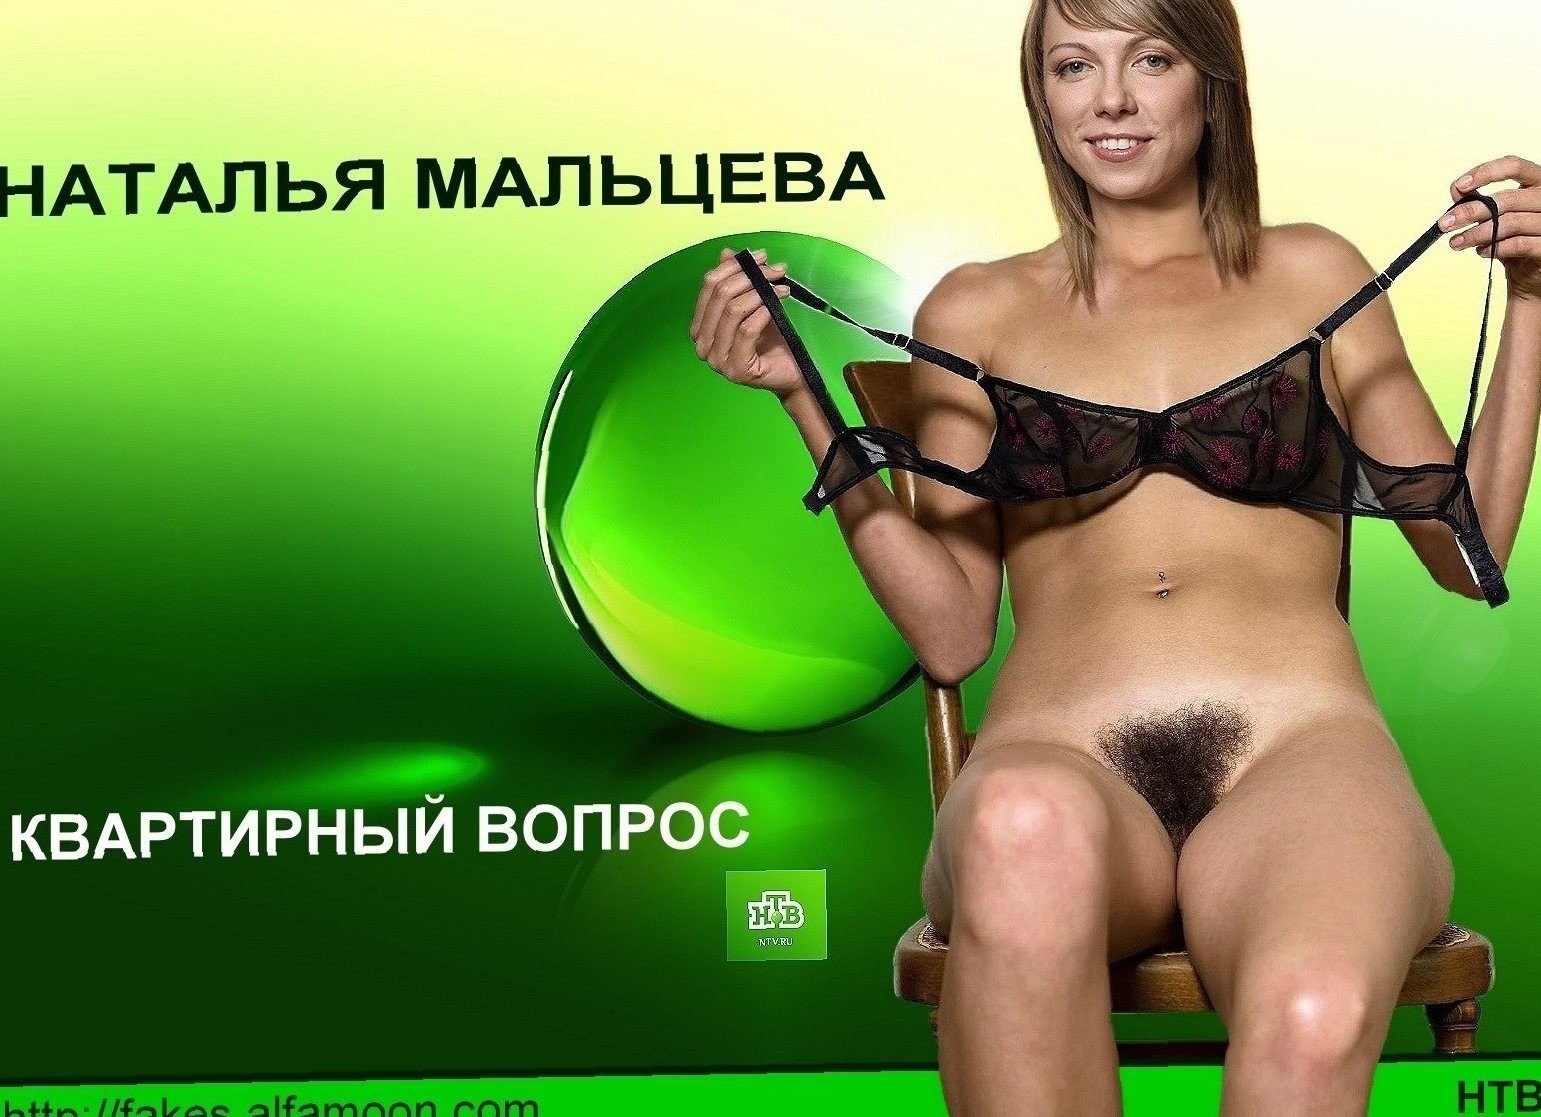 Наталья зотова голая (77 фото) - порно фото topdevka.com